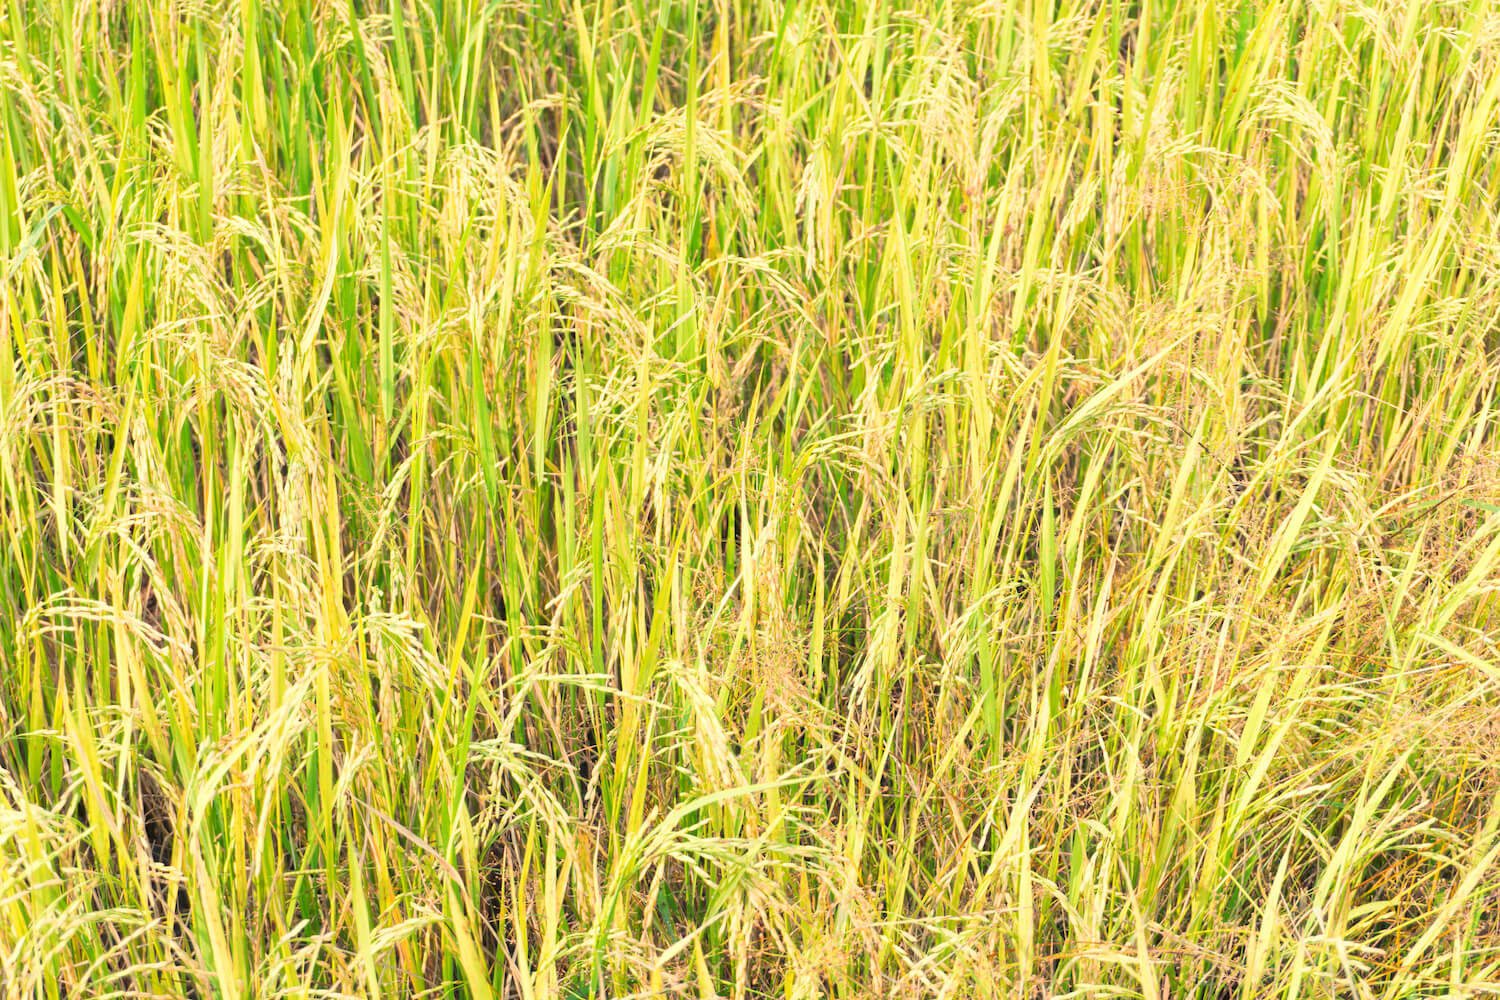 Field of golden rice. December 2021